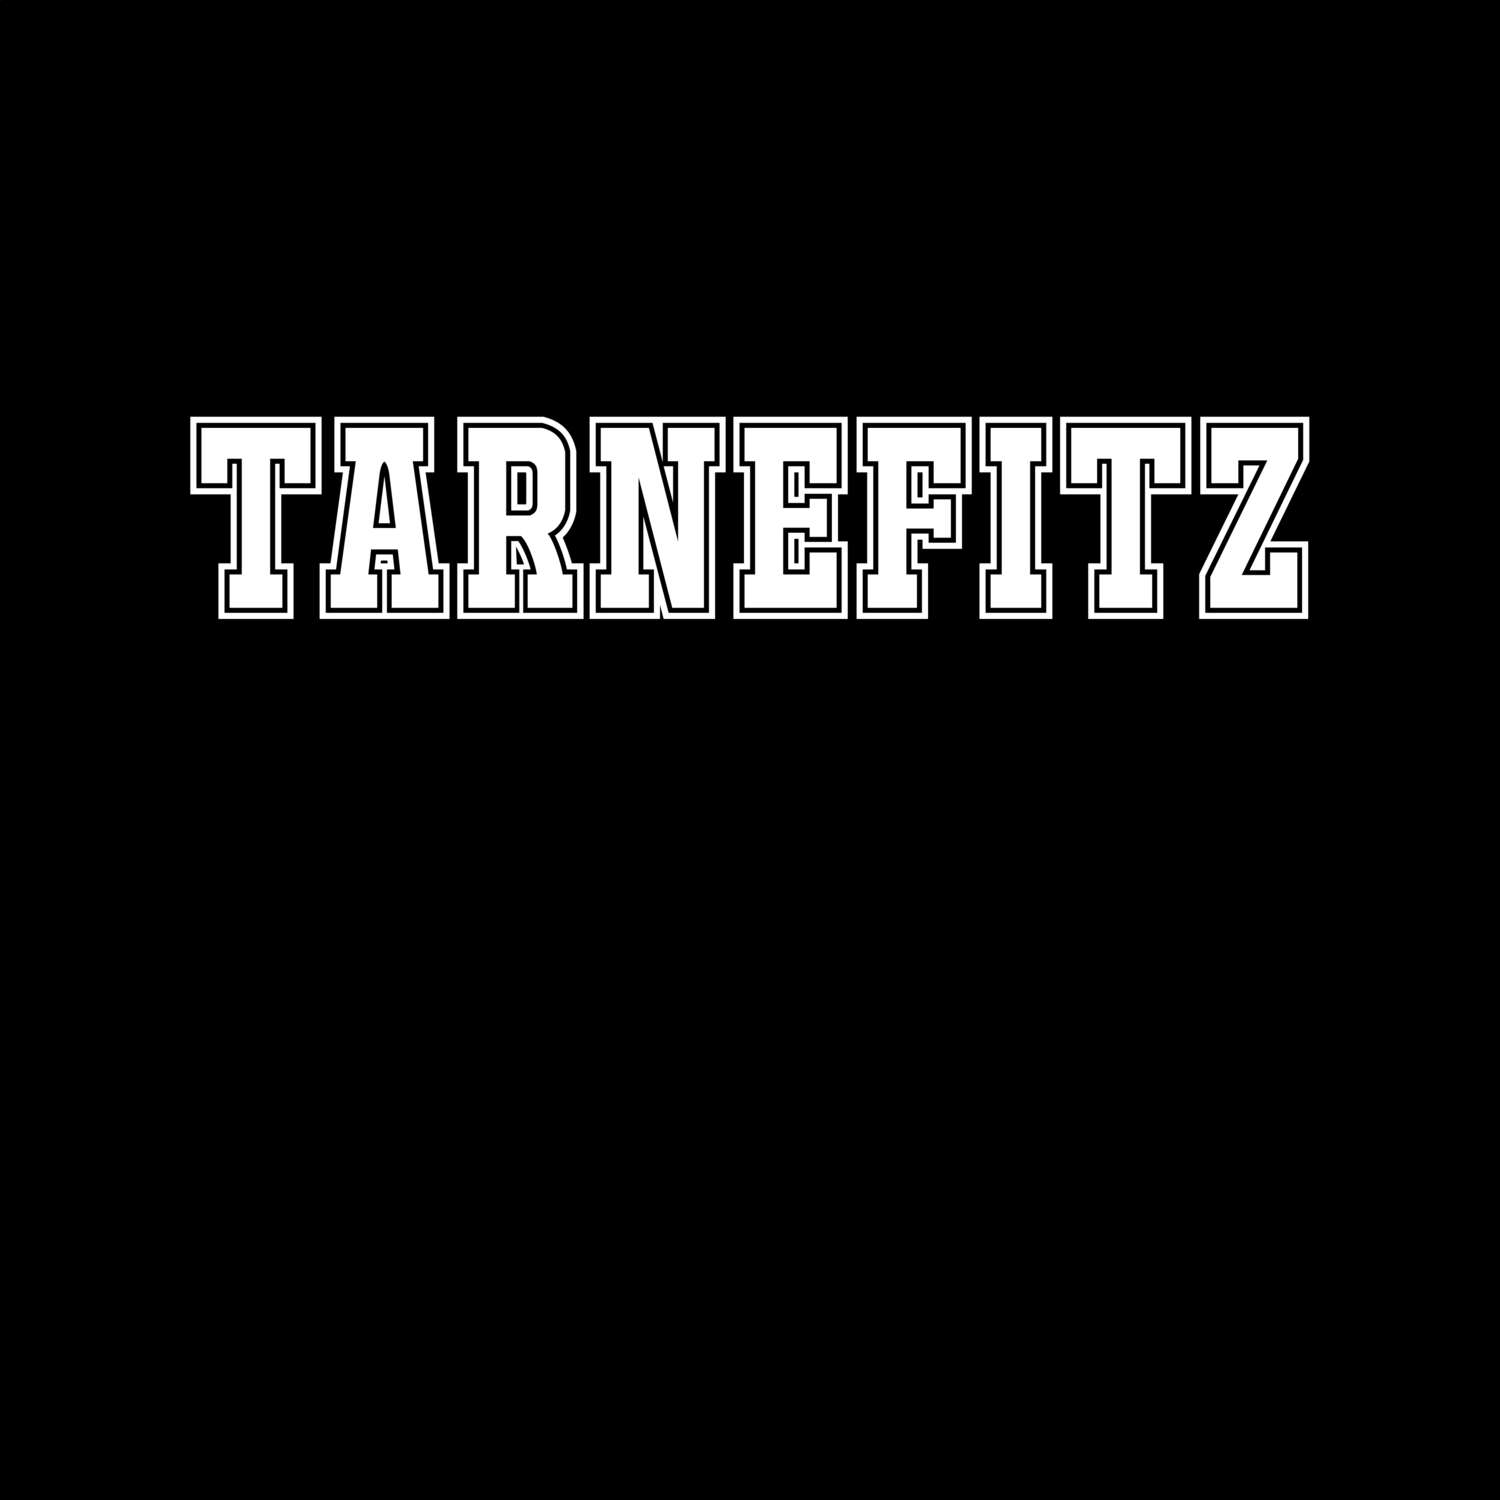 Tarnefitz T-Shirt »Classic«